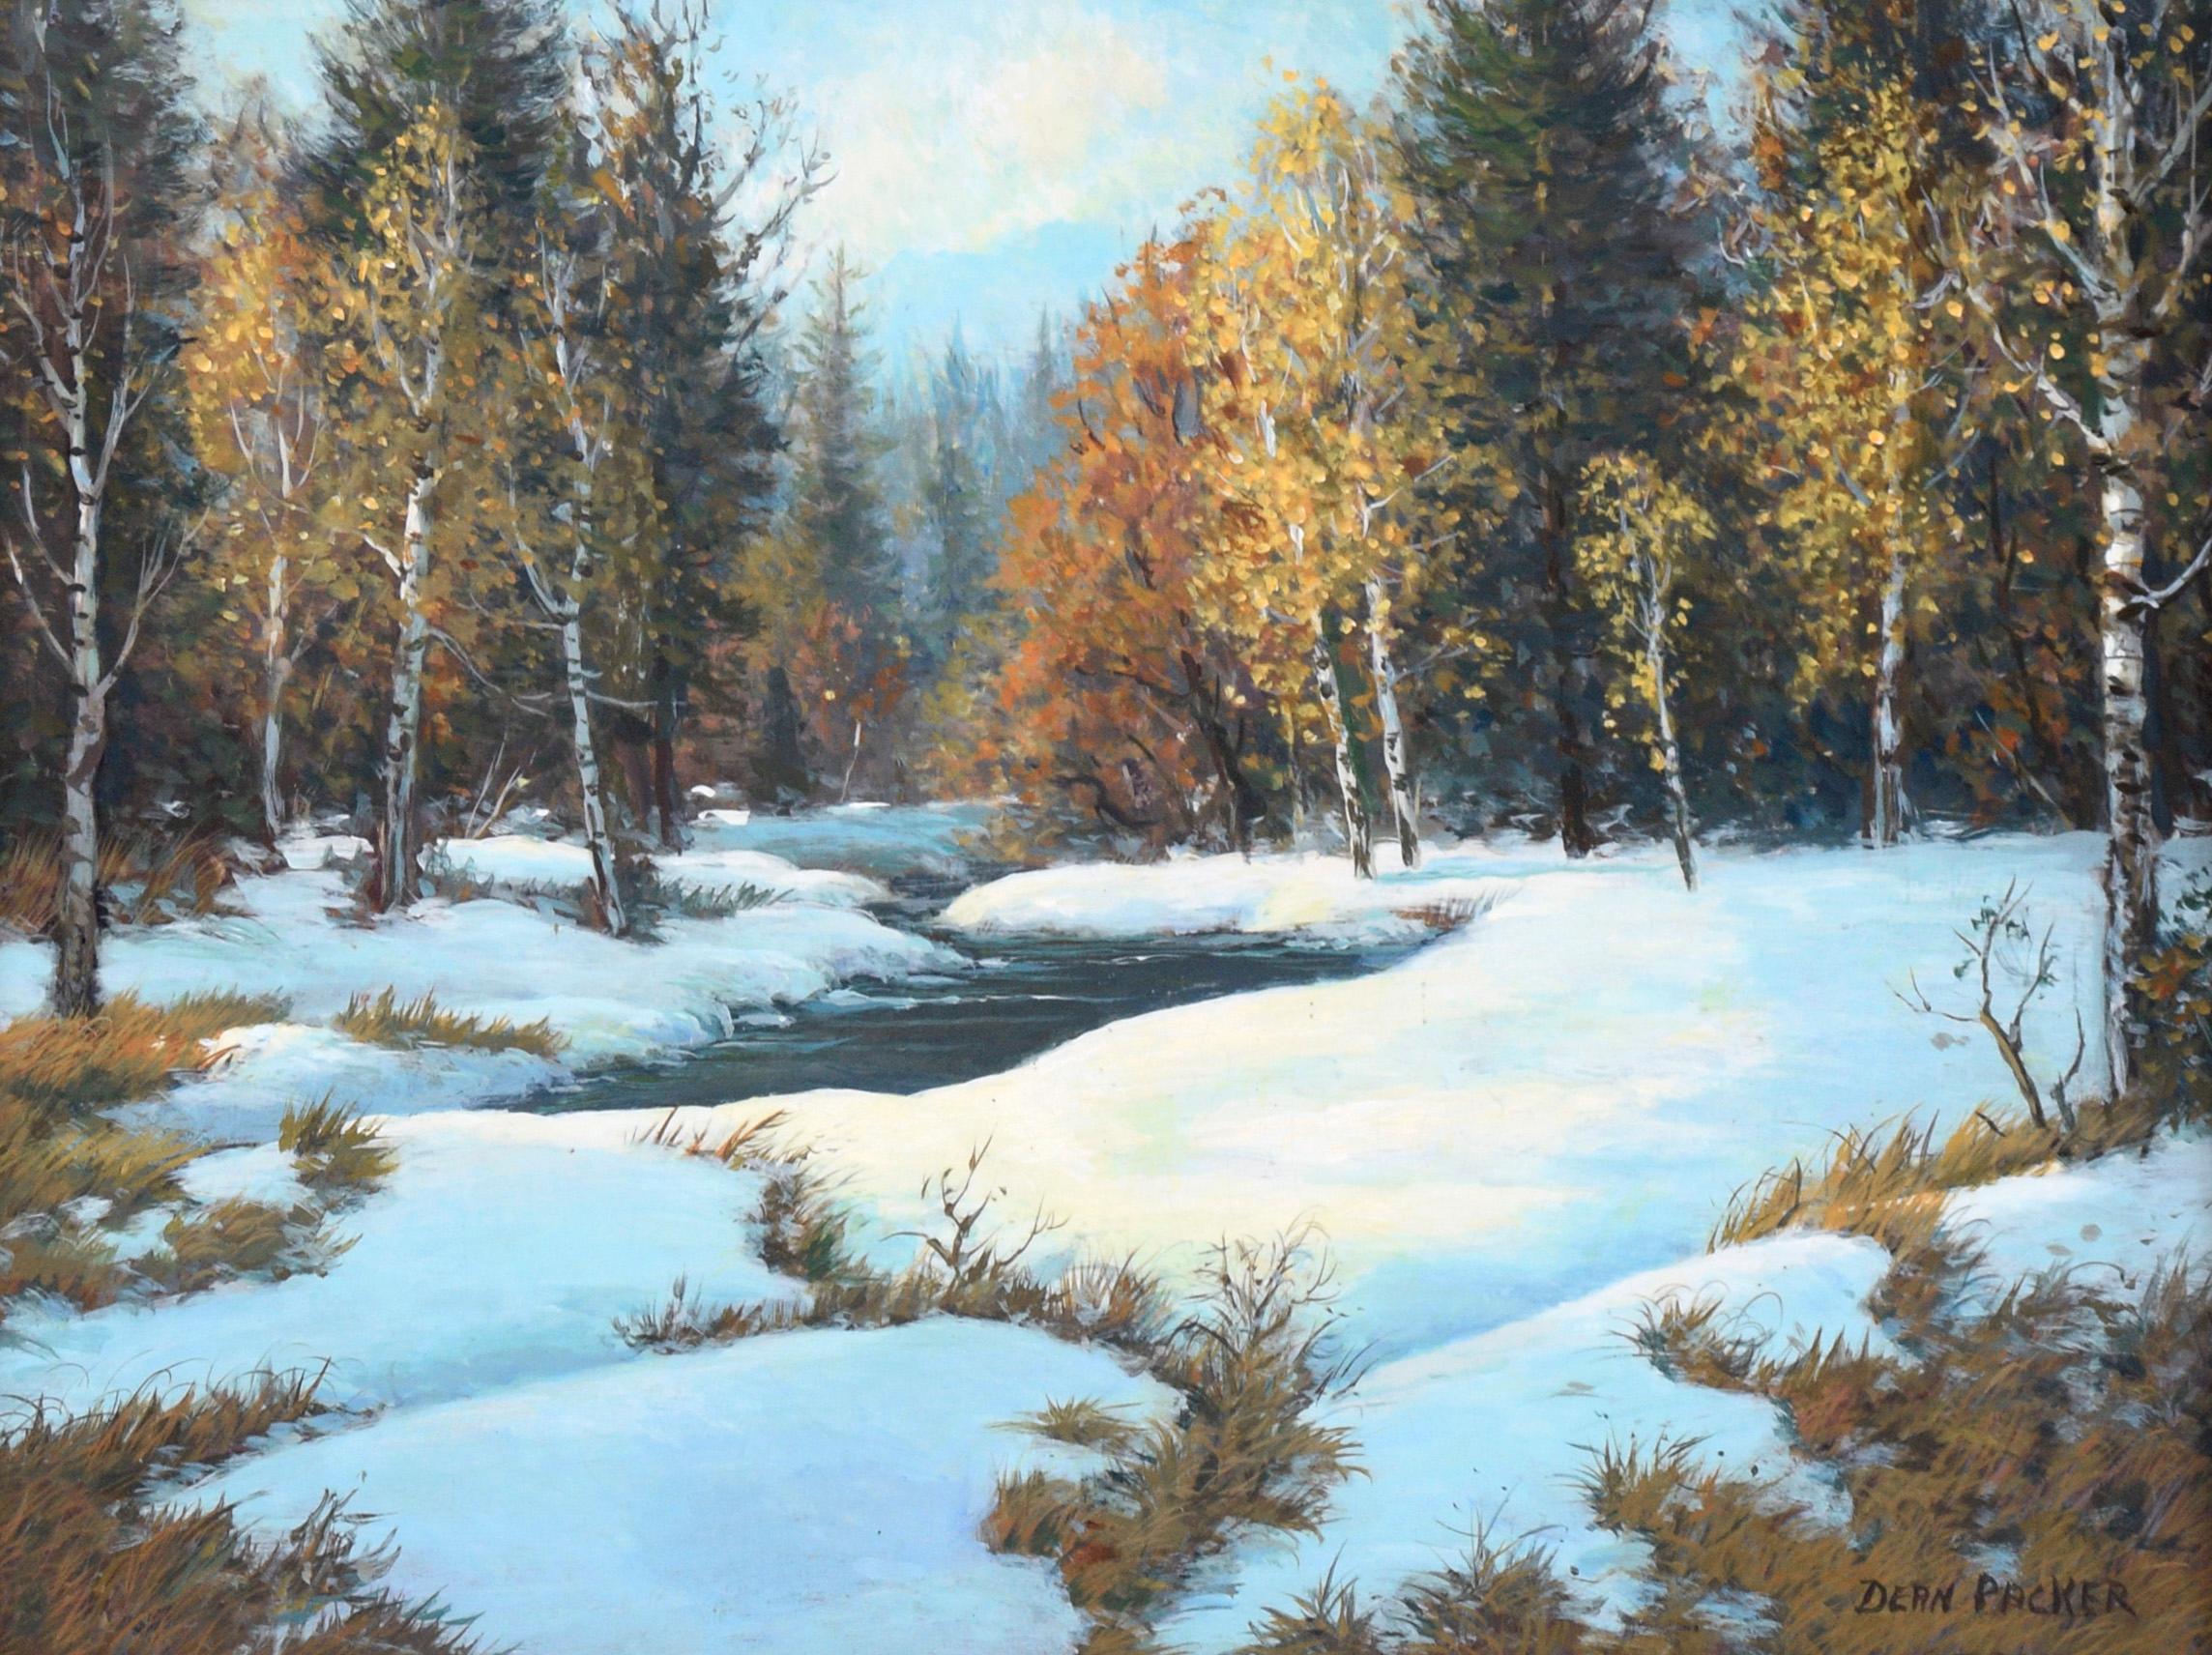 Snowy Creek in Hope Valley - Landscape in Oil on Masonite - Painting by Dean Packer